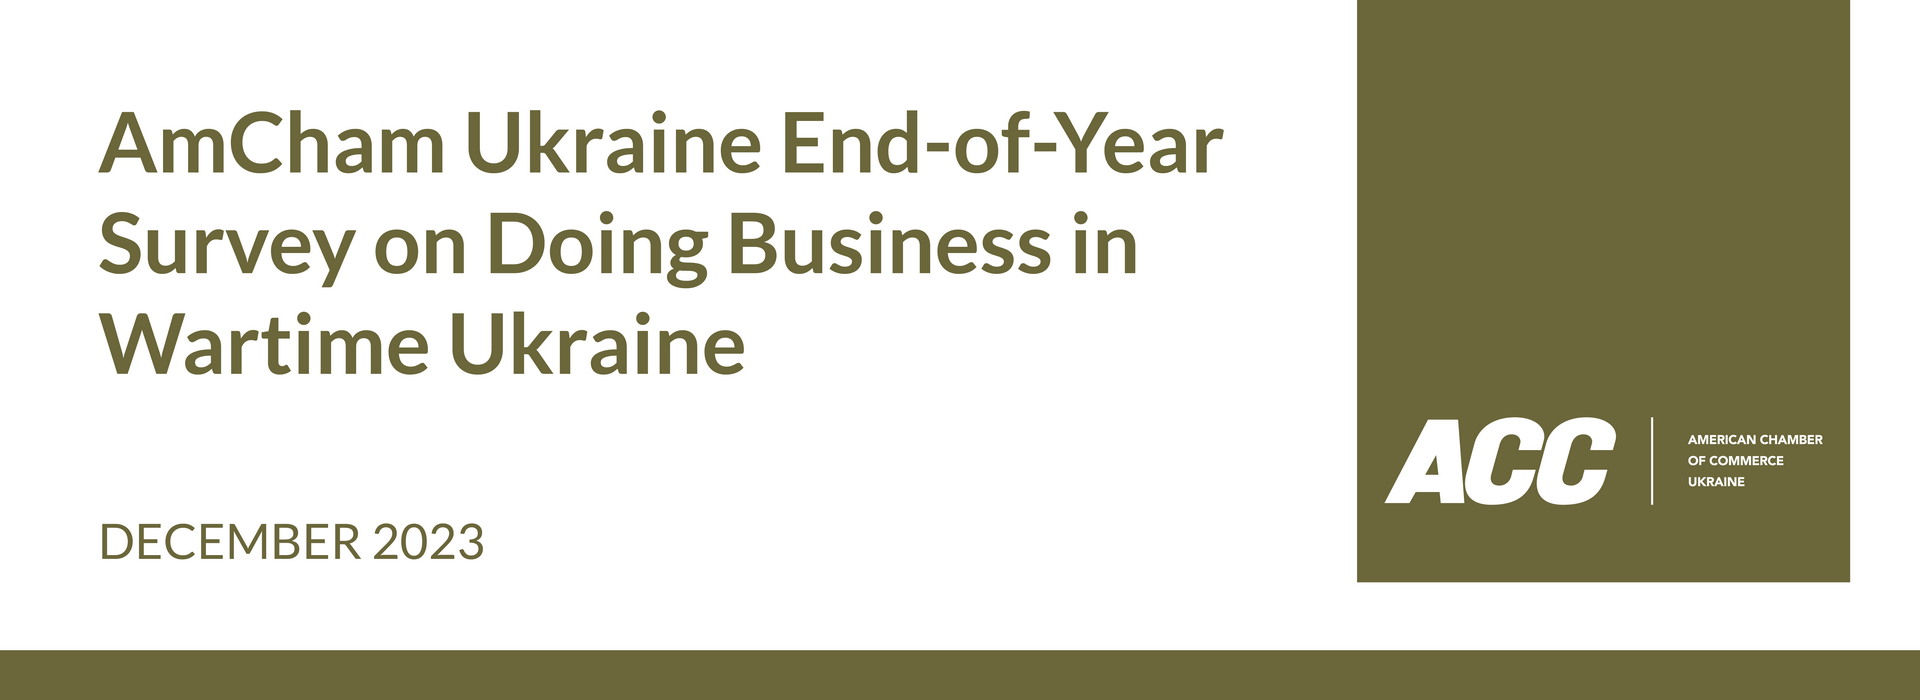 AmCham Ukraine End-of-Year Survey Results: Doing Business in Wartime Ukraine